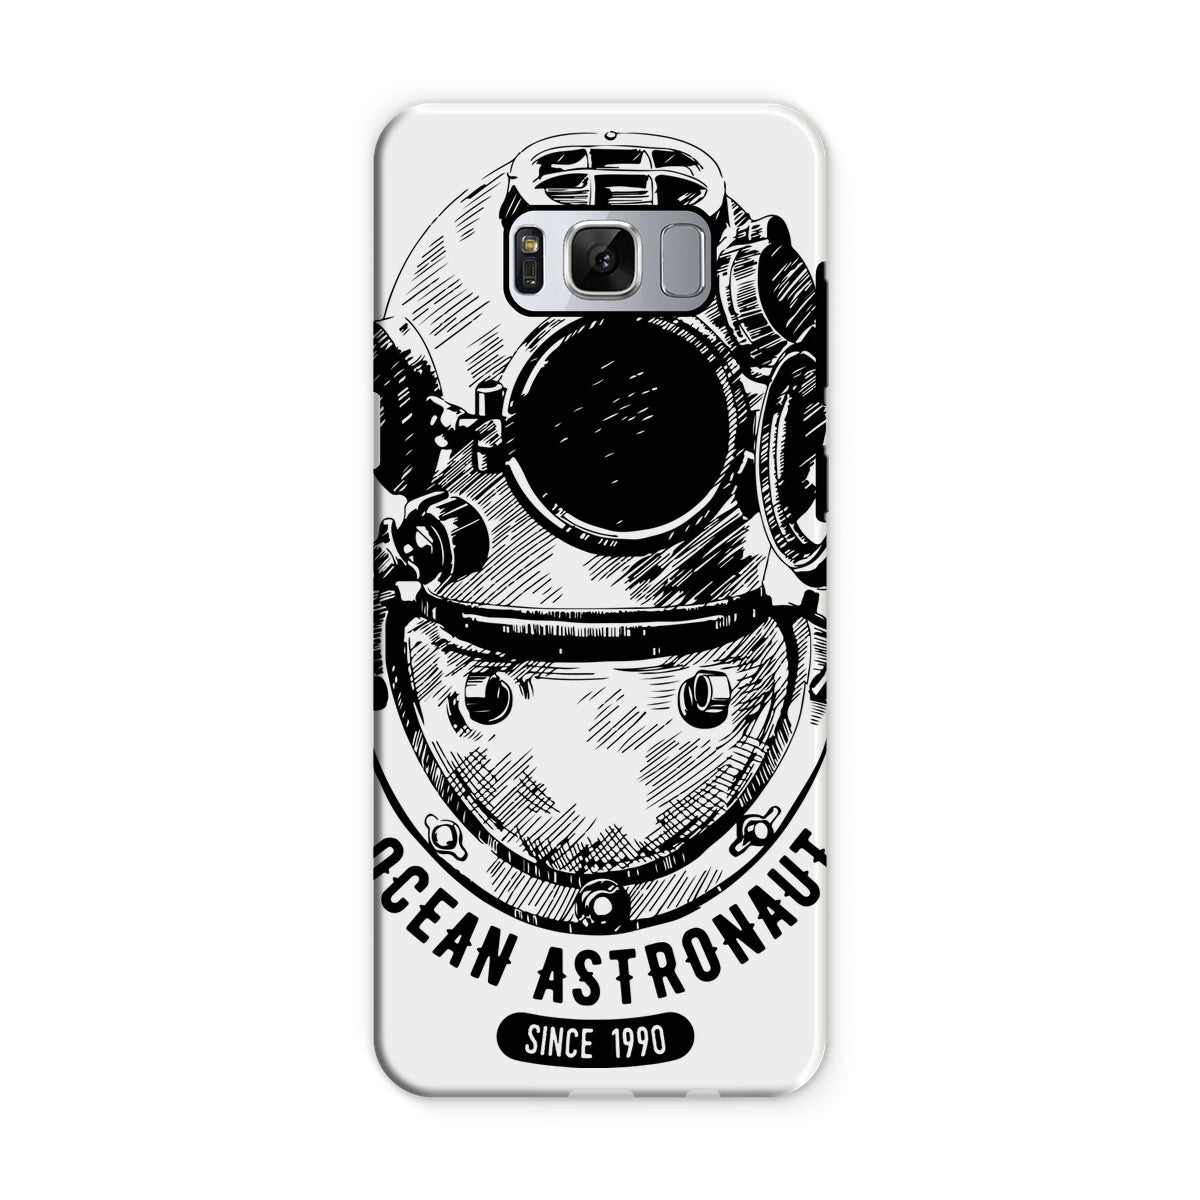 AQUA B&W - 05 - Ocean astronaut - Tough Phone Case